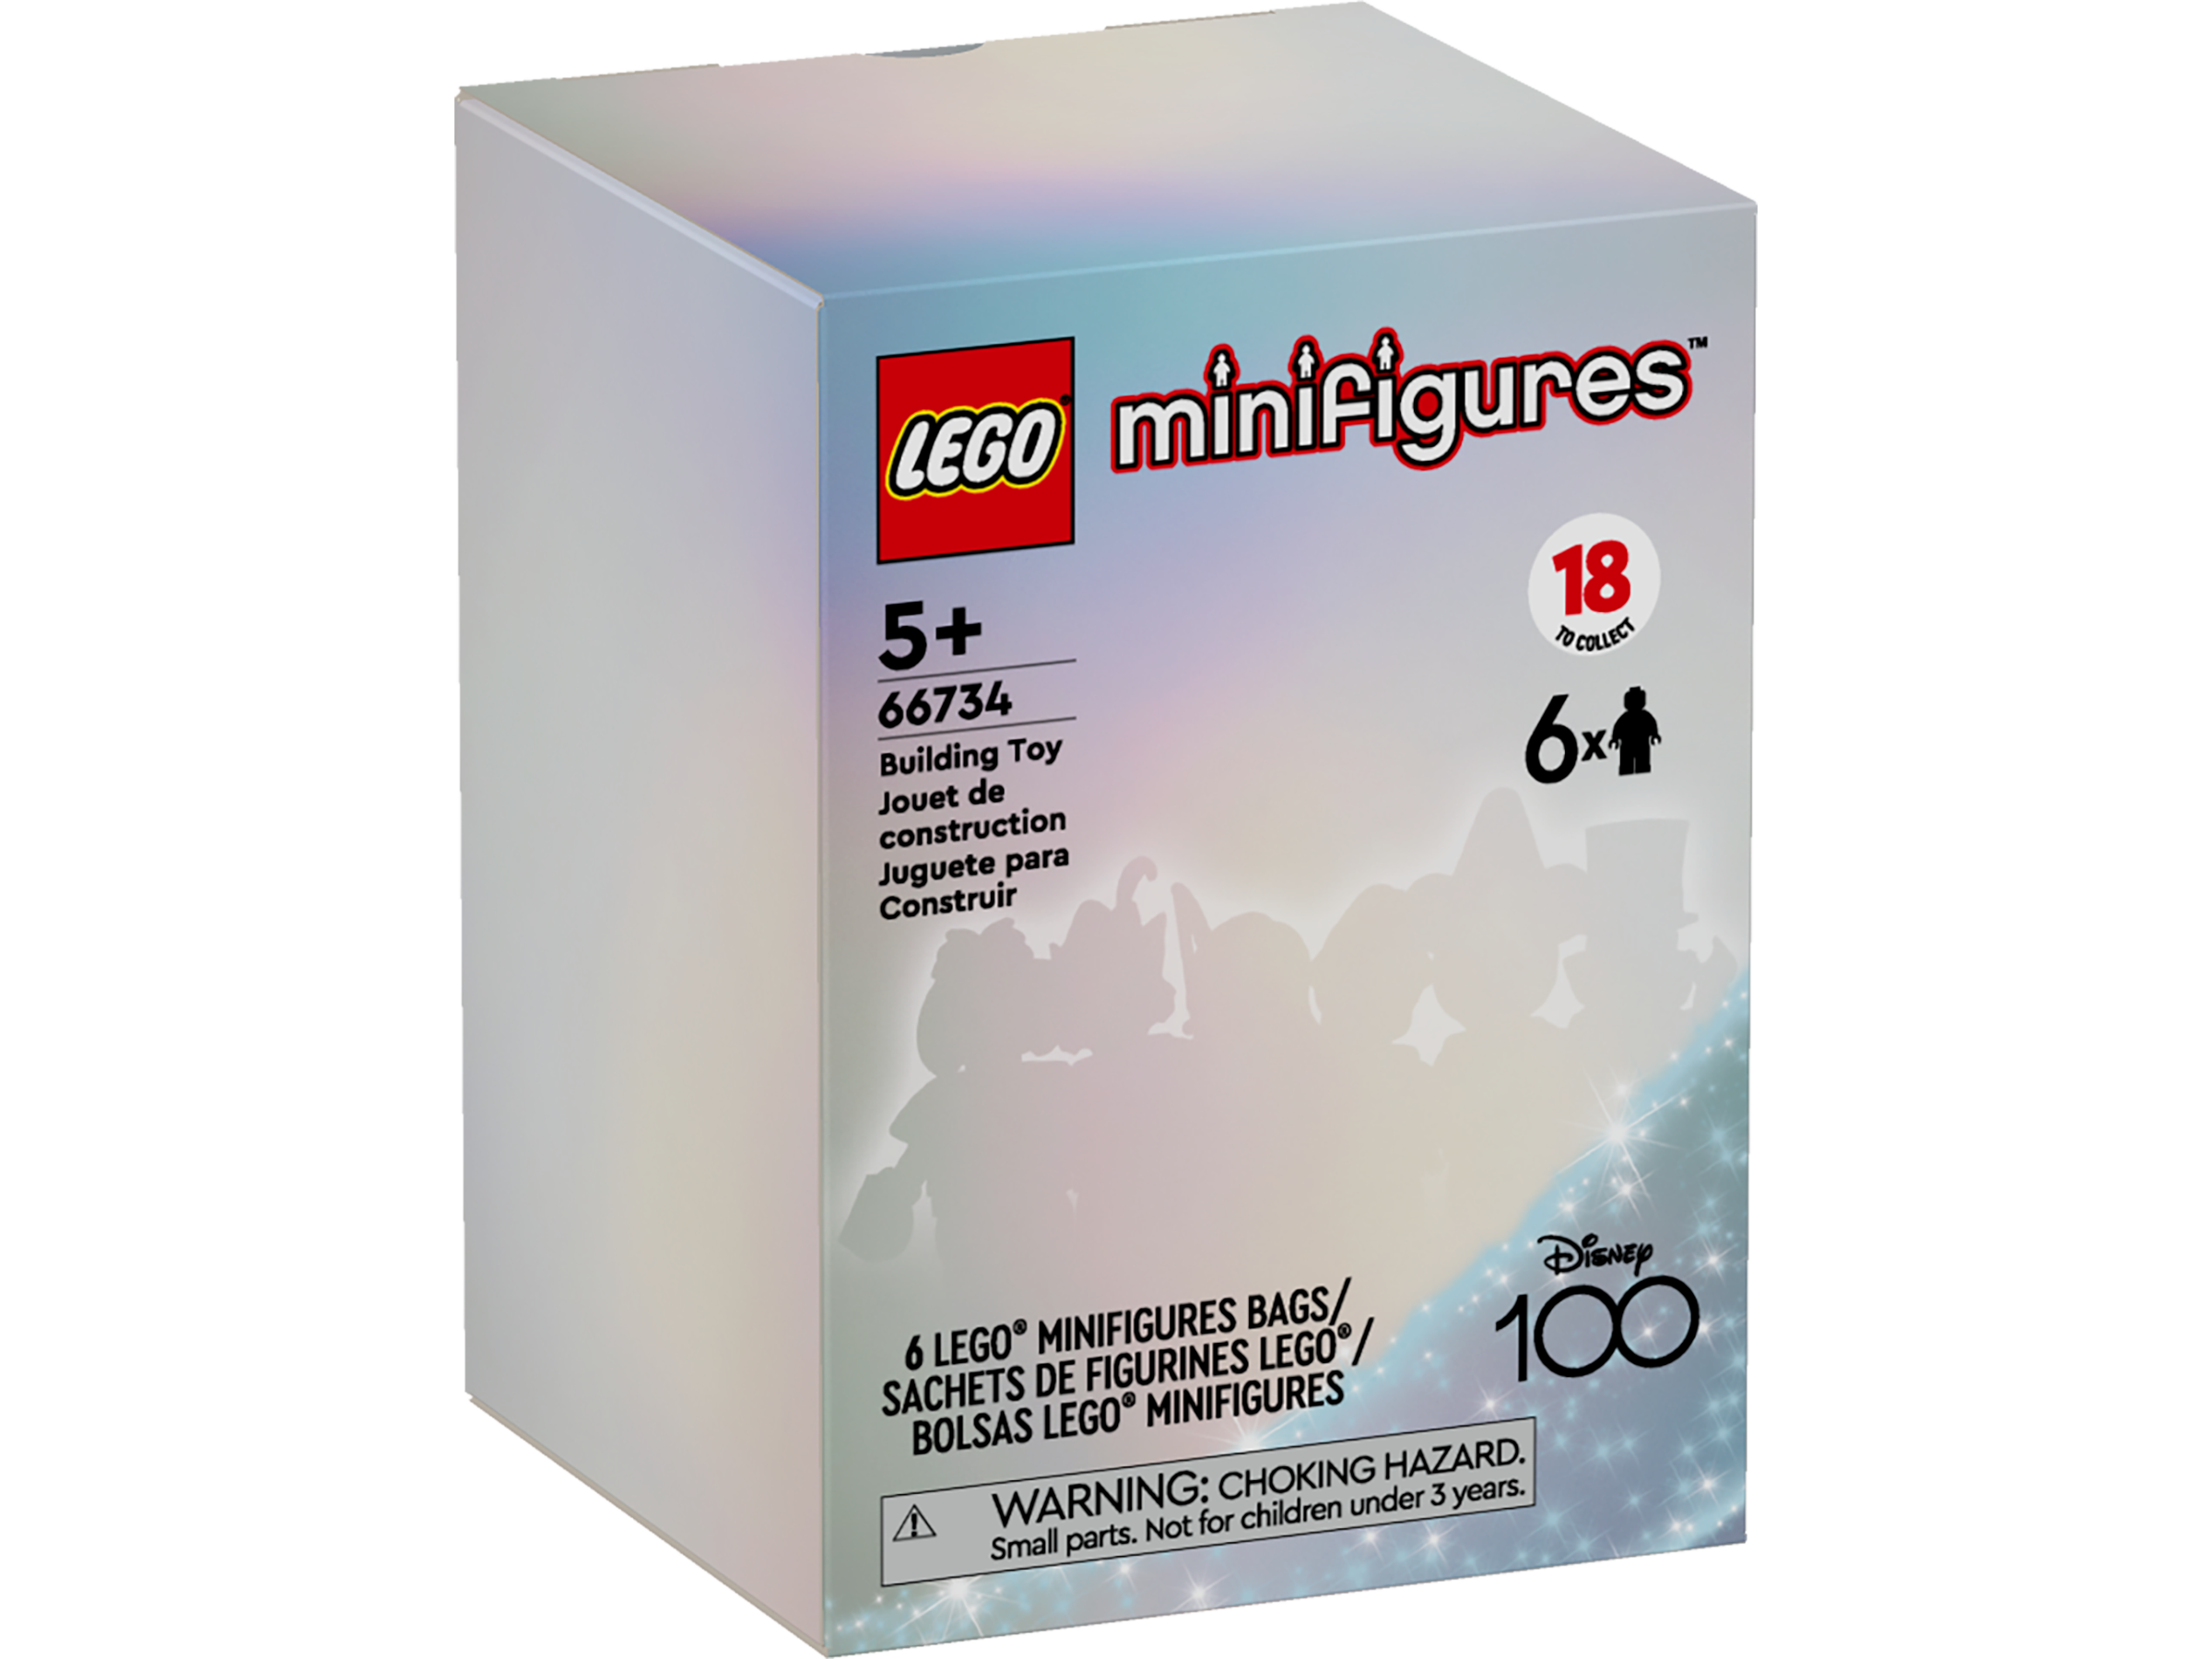 LEGO DISNEY 100 Minifigures 71038 - STITCH 626 - Ready to Ship